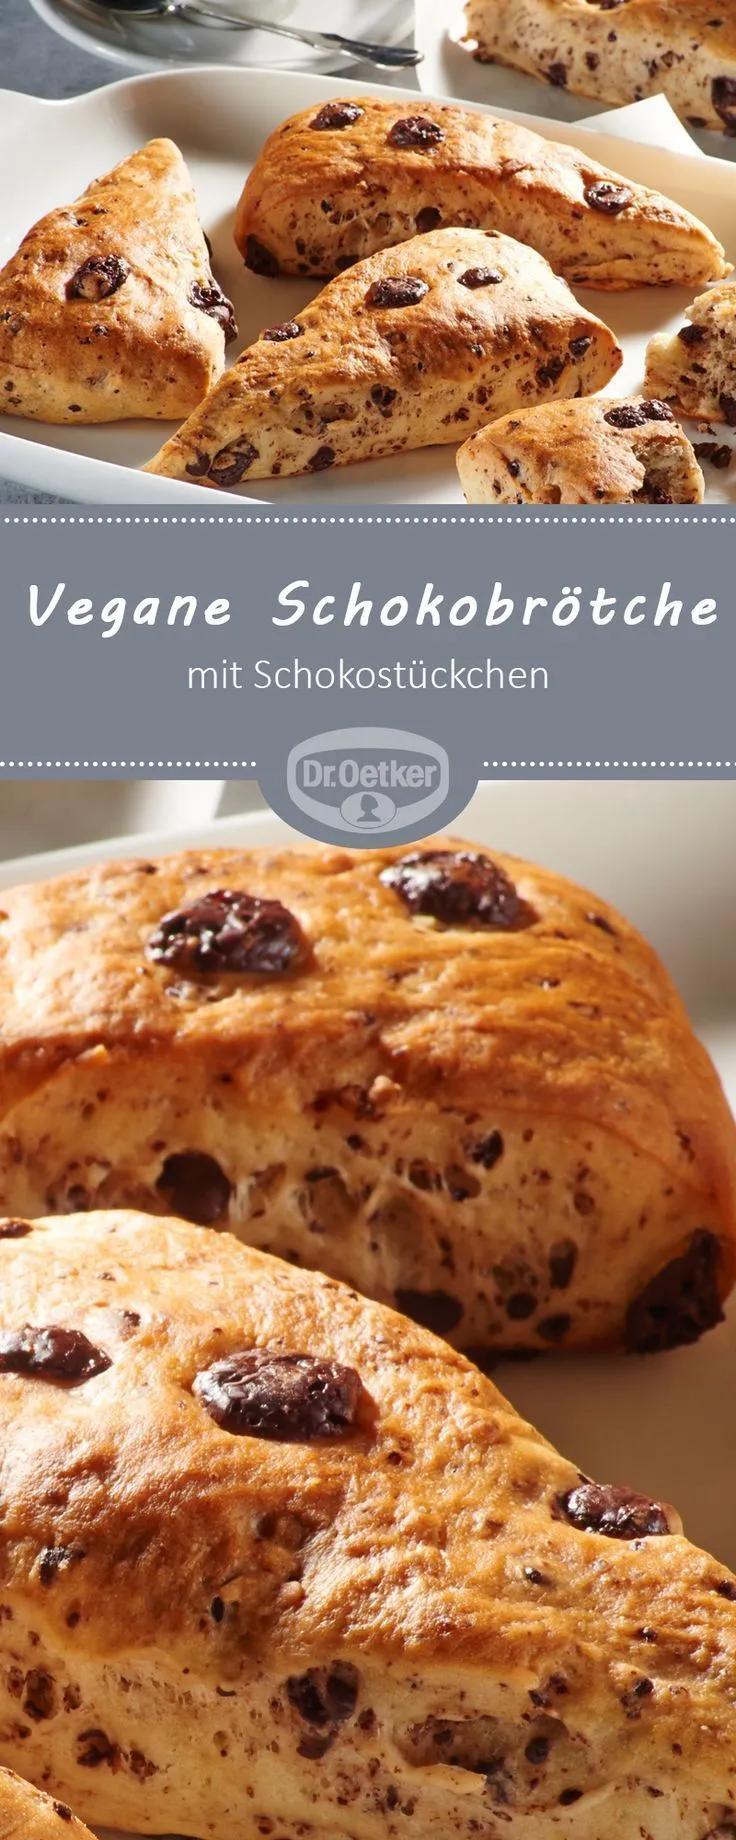 Vegane Schokobrötchen | Rezept | Vegan backen, Vegane leckereien ...